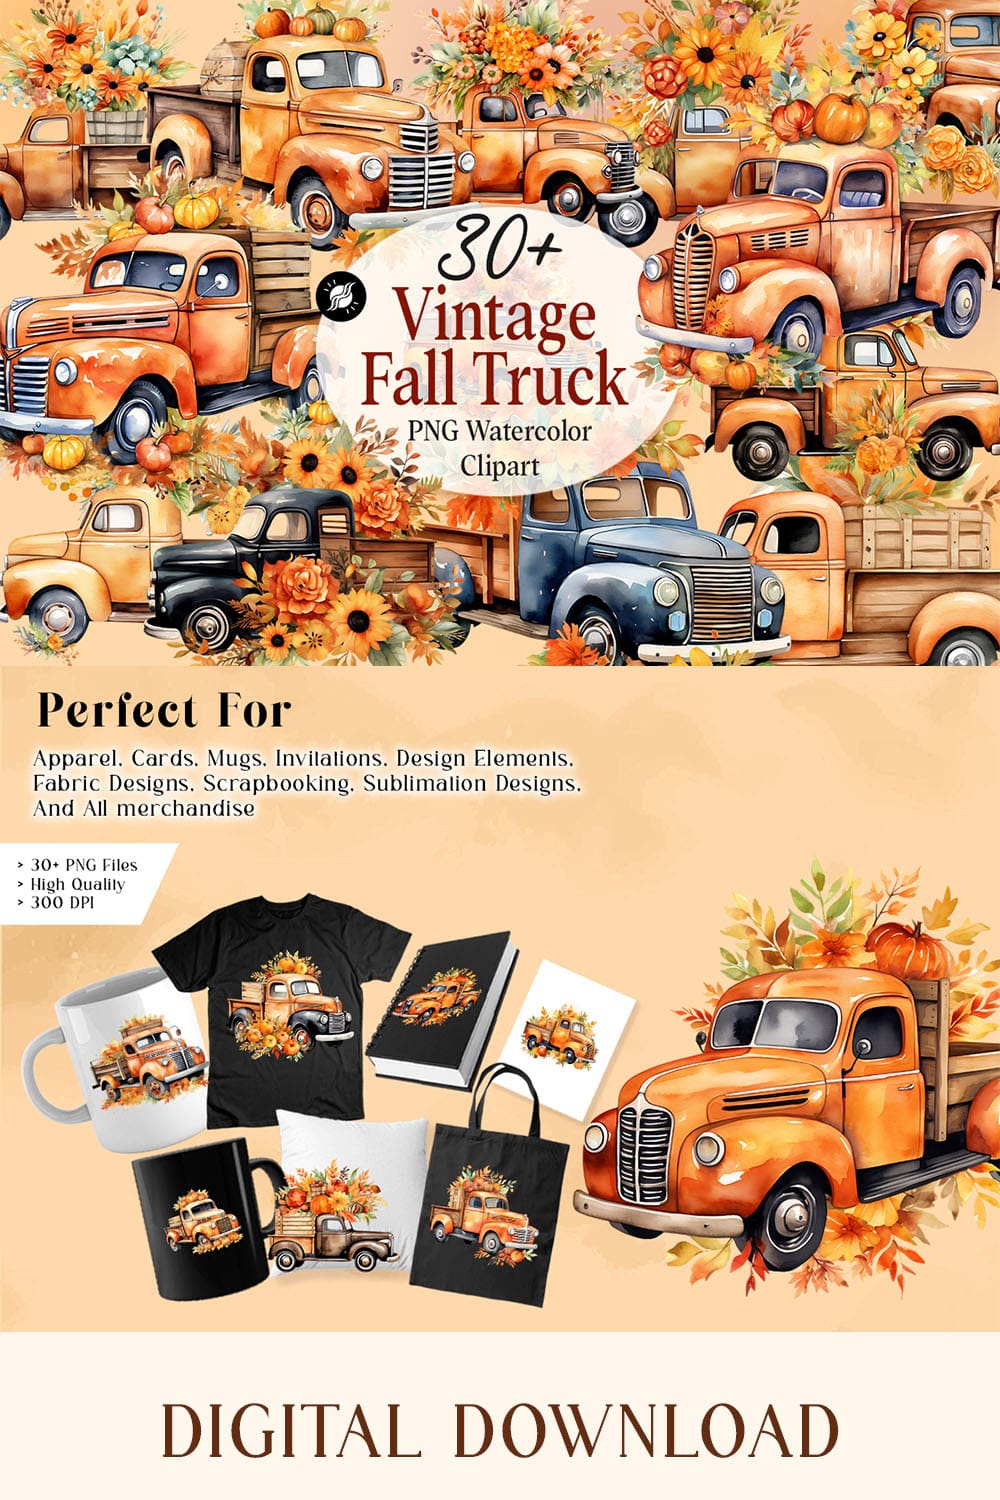 Vintage Fall Truck PNG Watercolor Sublimation Clipart Bundle pinterest preview image.